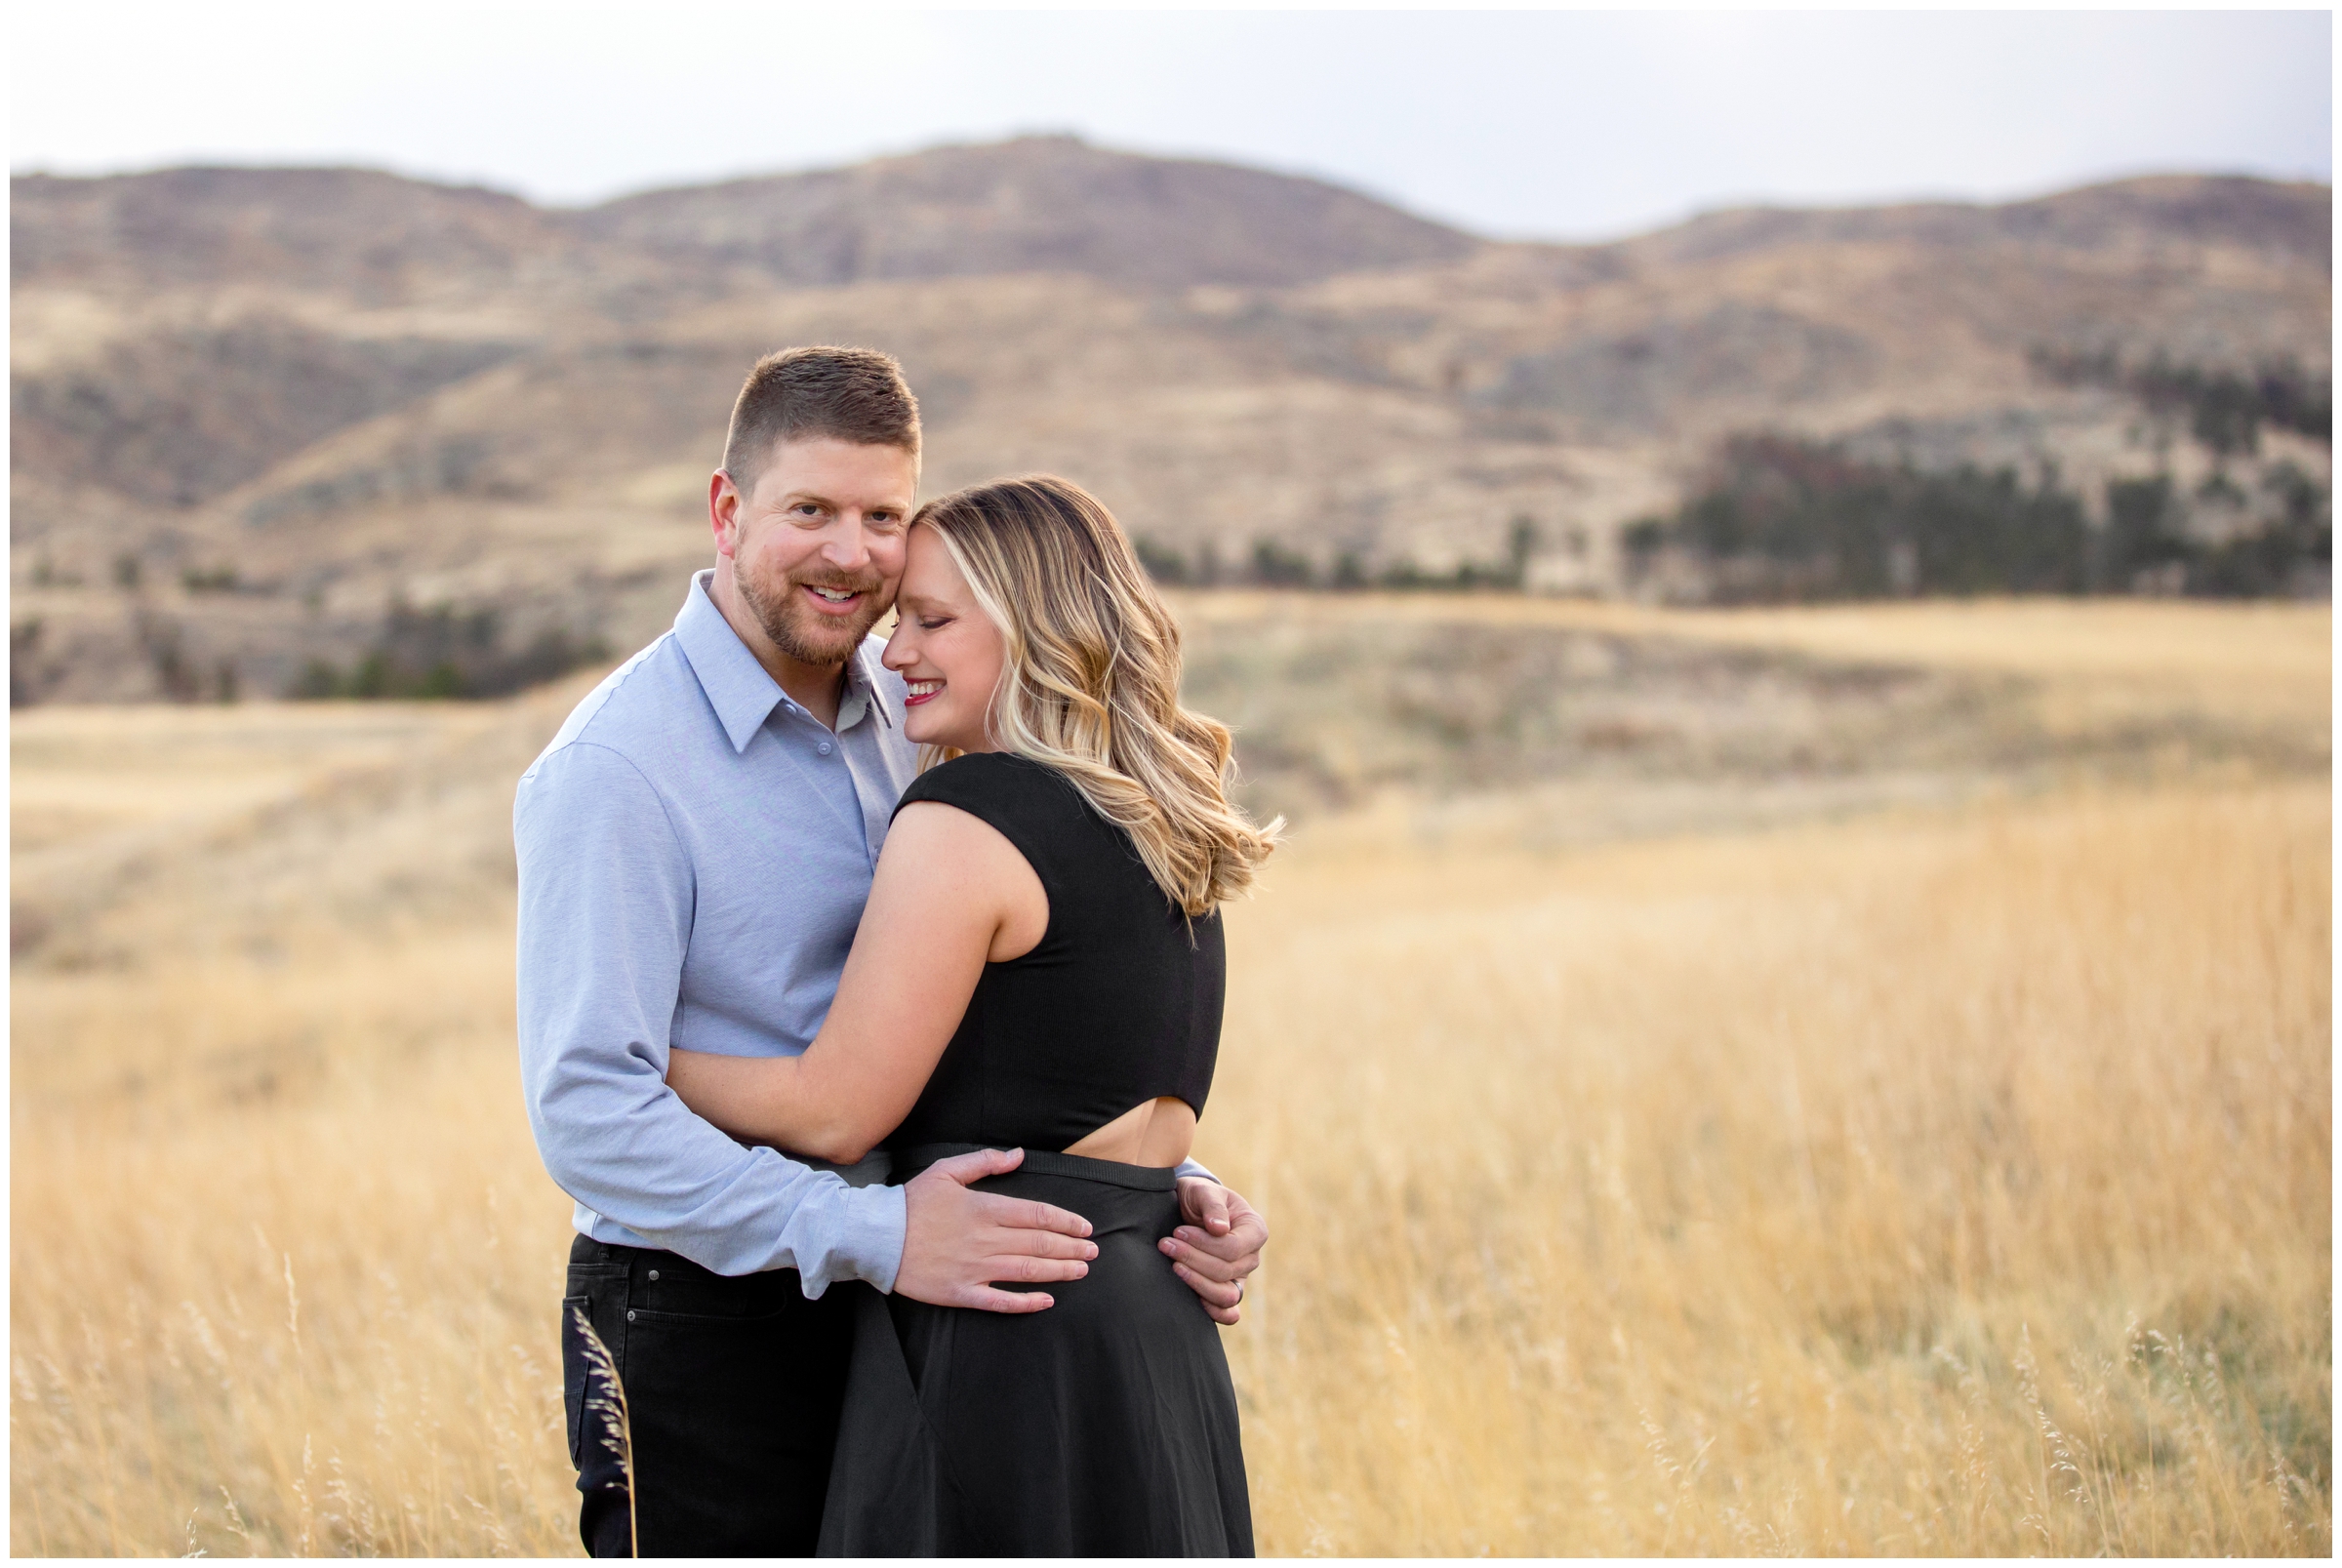 Loveland couples portraits at Bobcat Ridge by Fort Collins wedding photographer Plum Pretty Photography